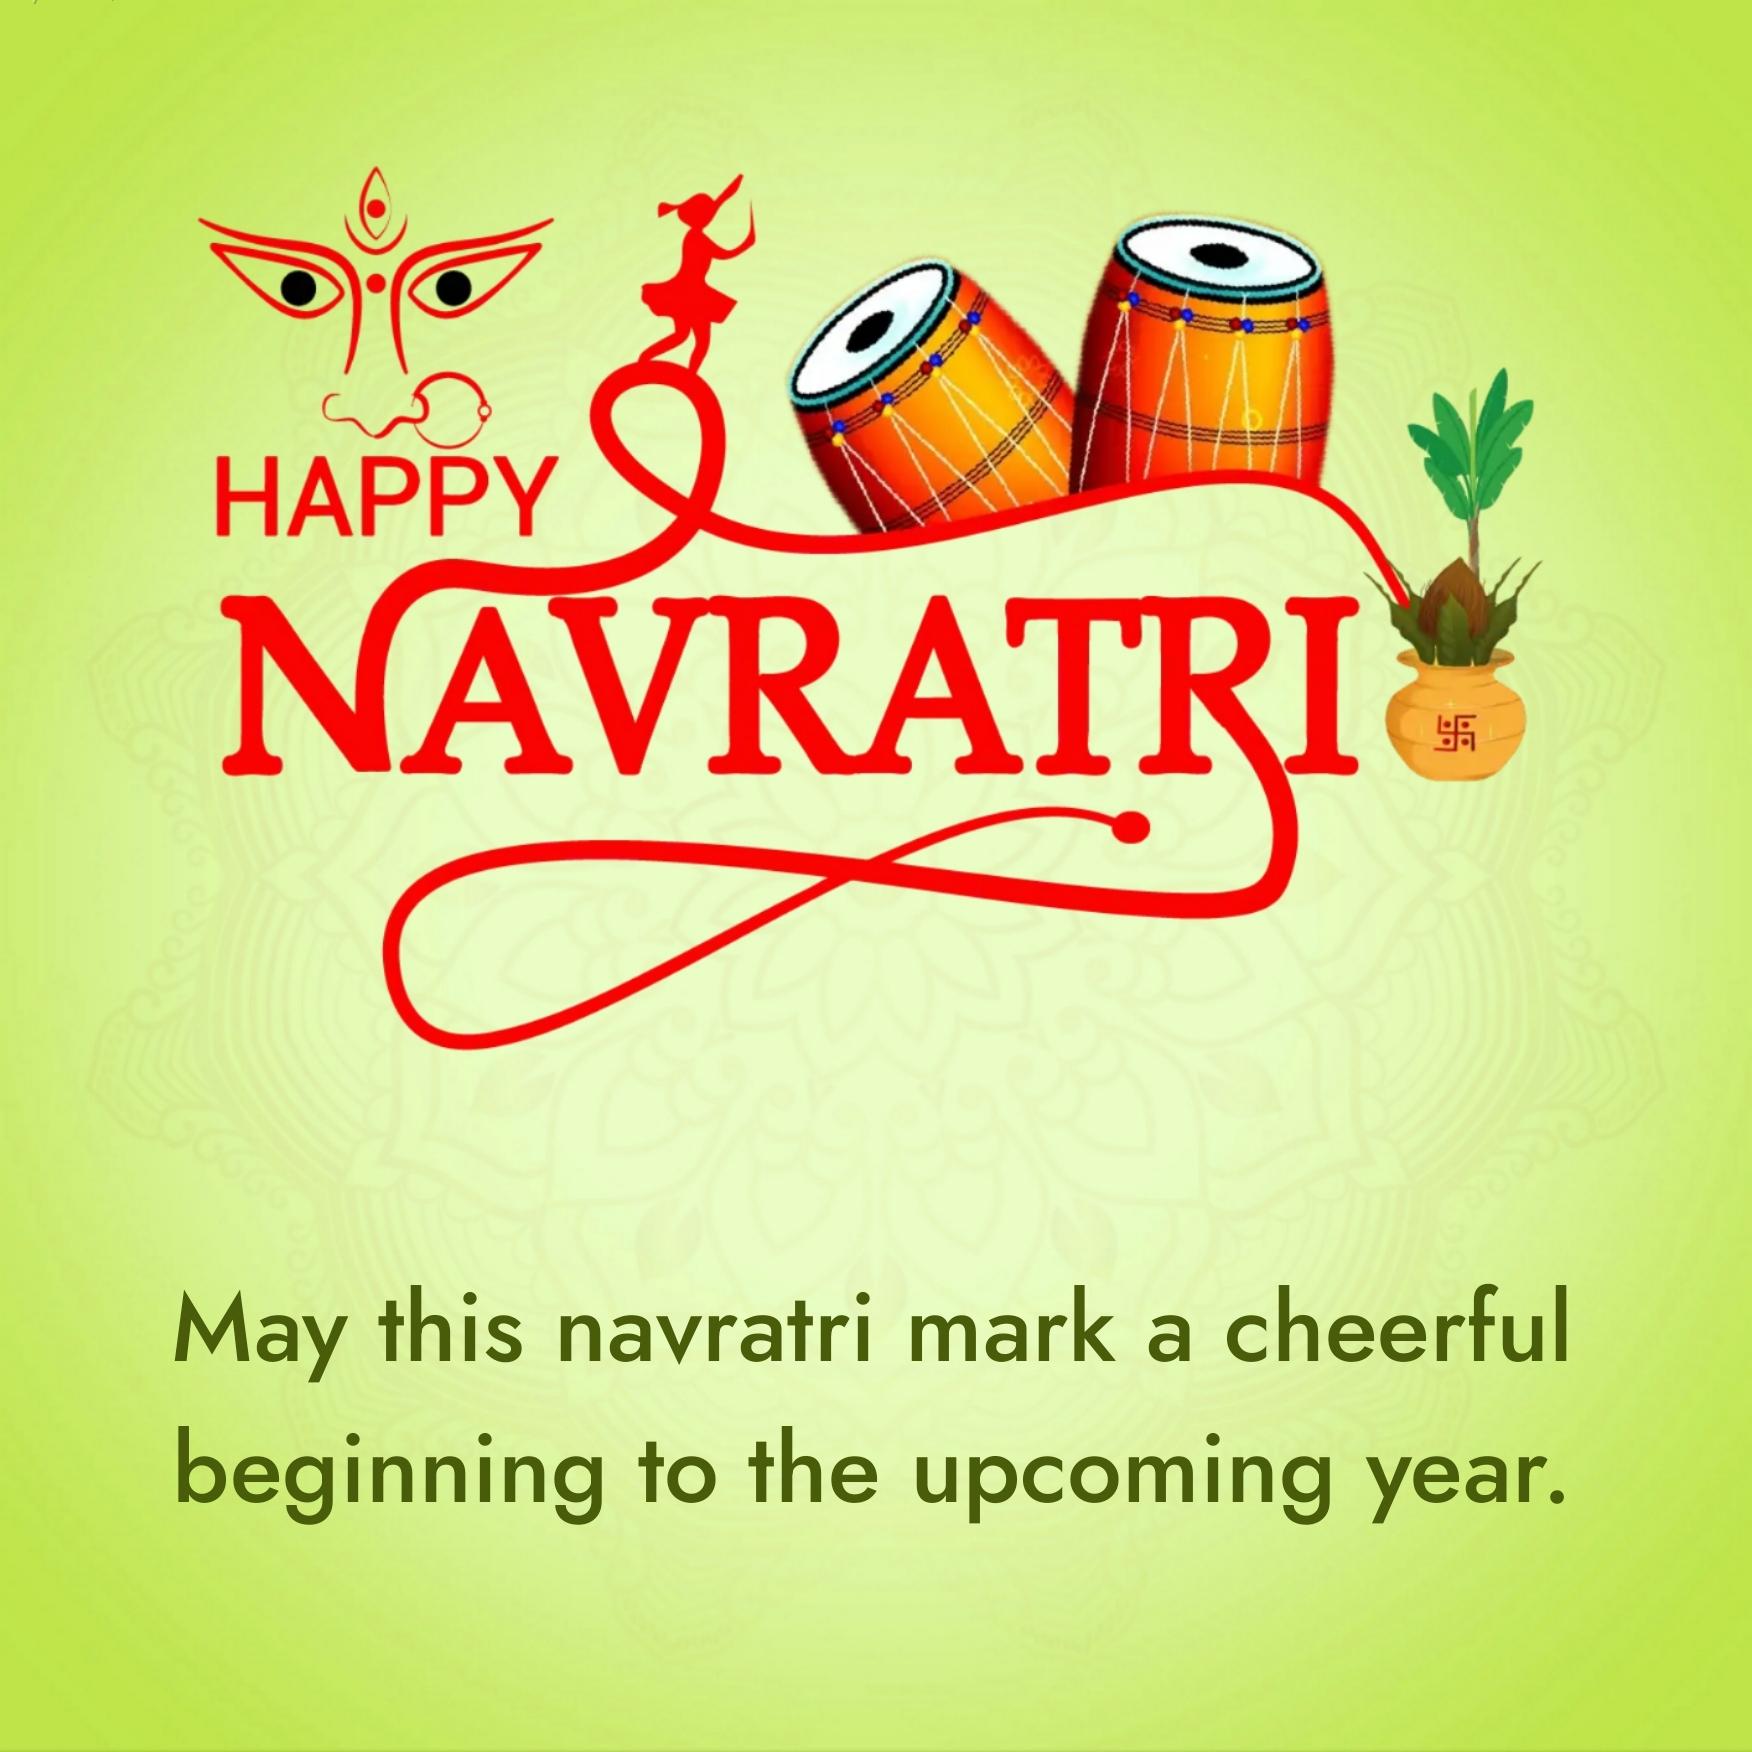 May this navratri mark a cheerful beginning to the upcoming year